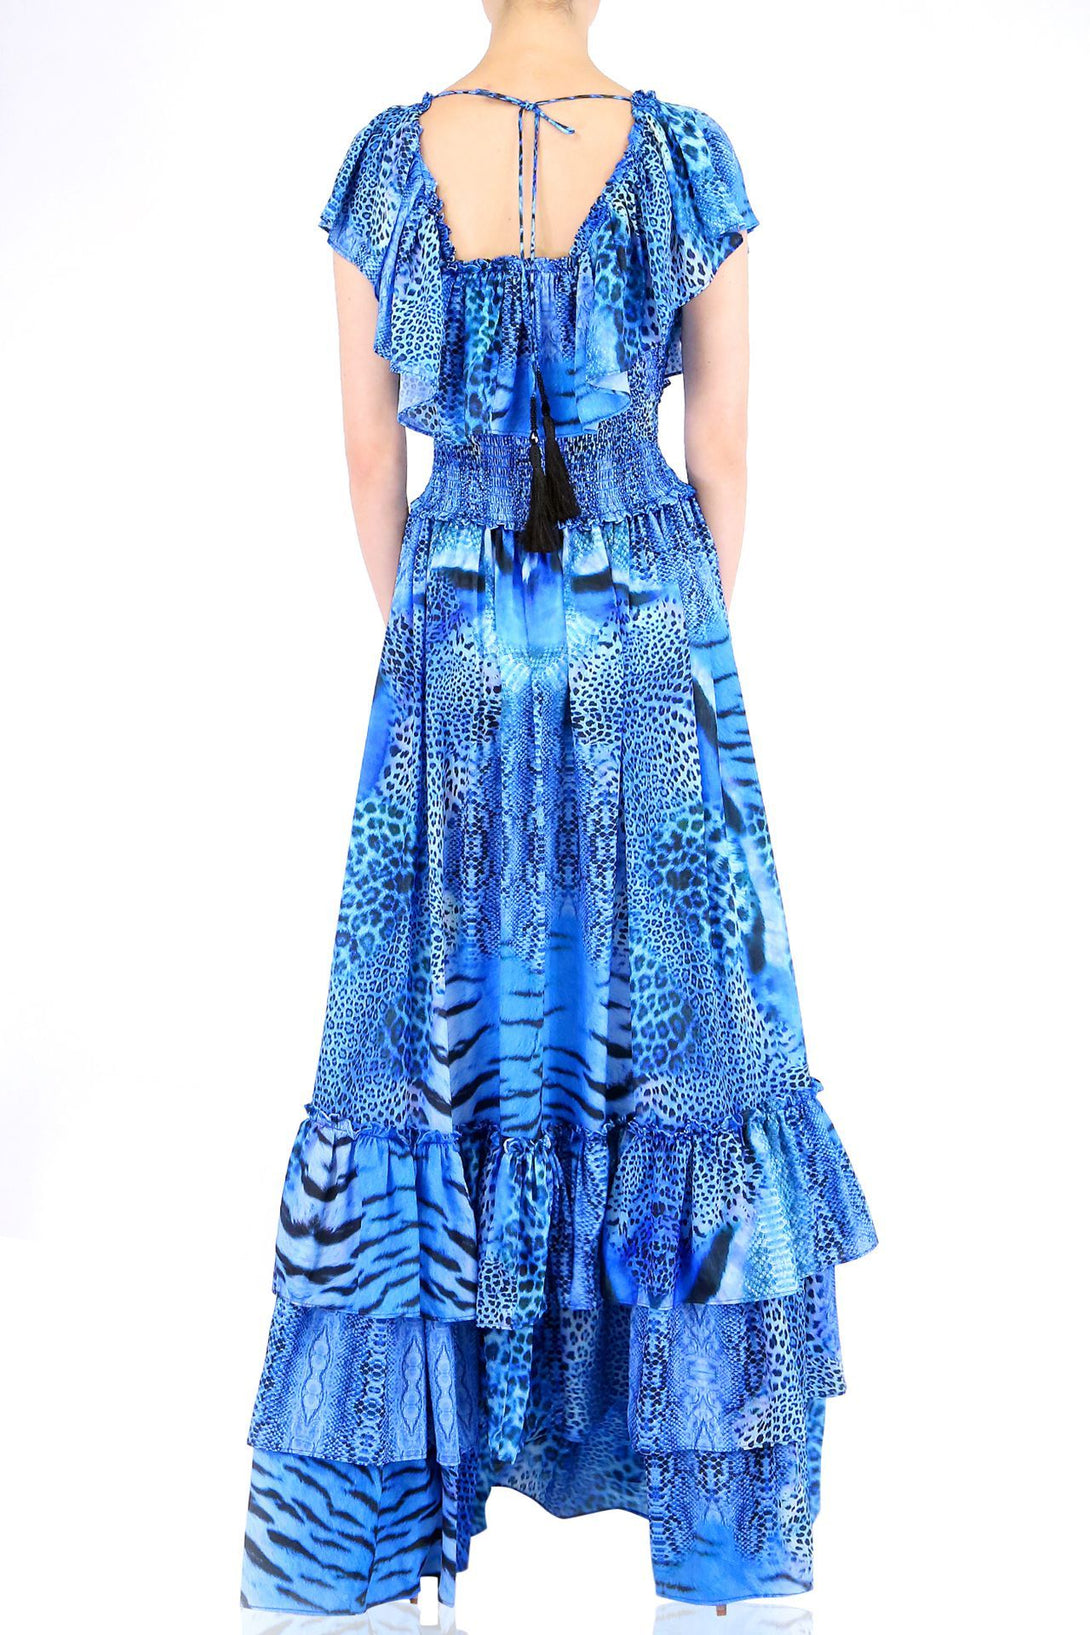  blue long dress forma Shahida Parides, long dresses for women, flowy maxi dress, Shahida Parides,